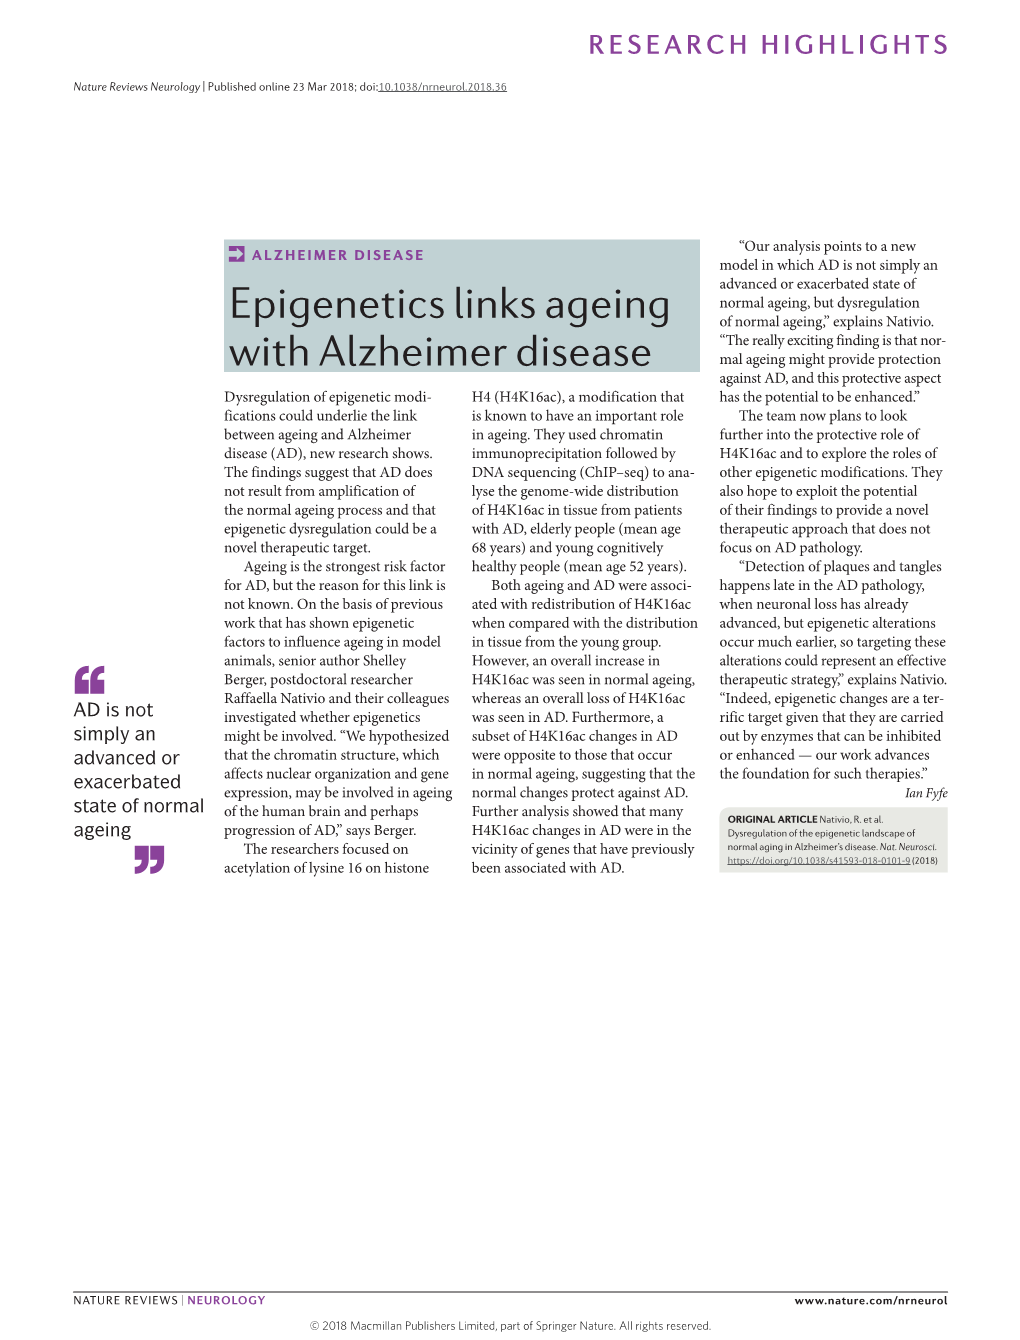 Epigenetics Links Ageing with Alzheimer Disease